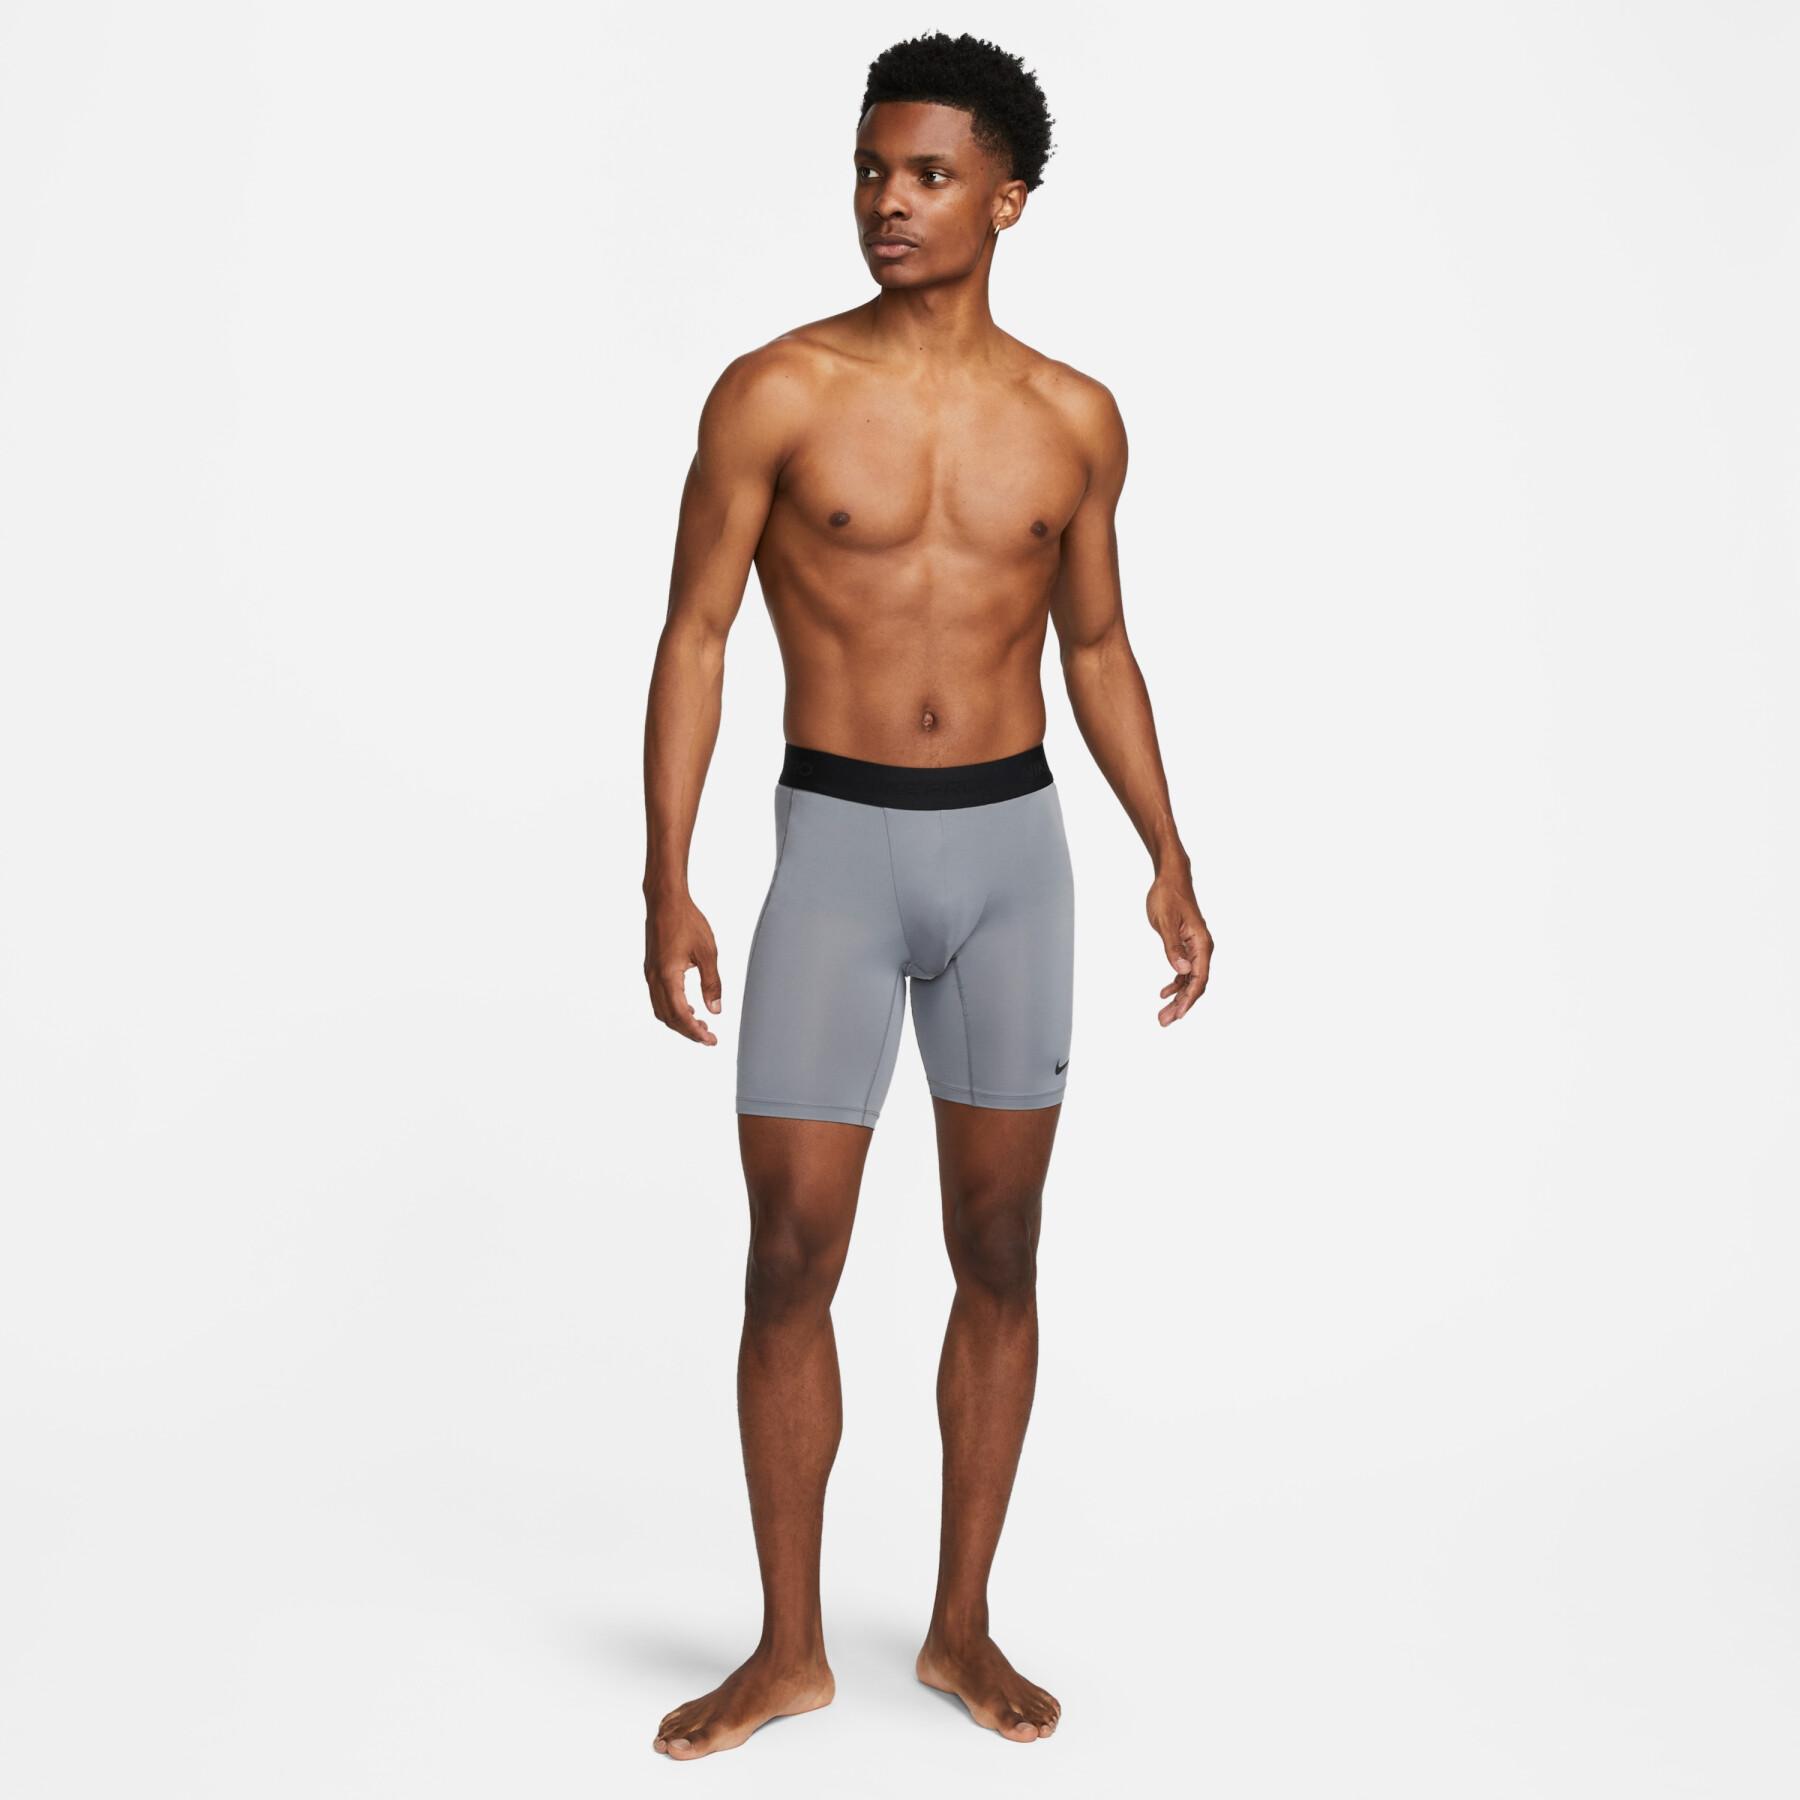 Long shorts Nike Dri-FIT